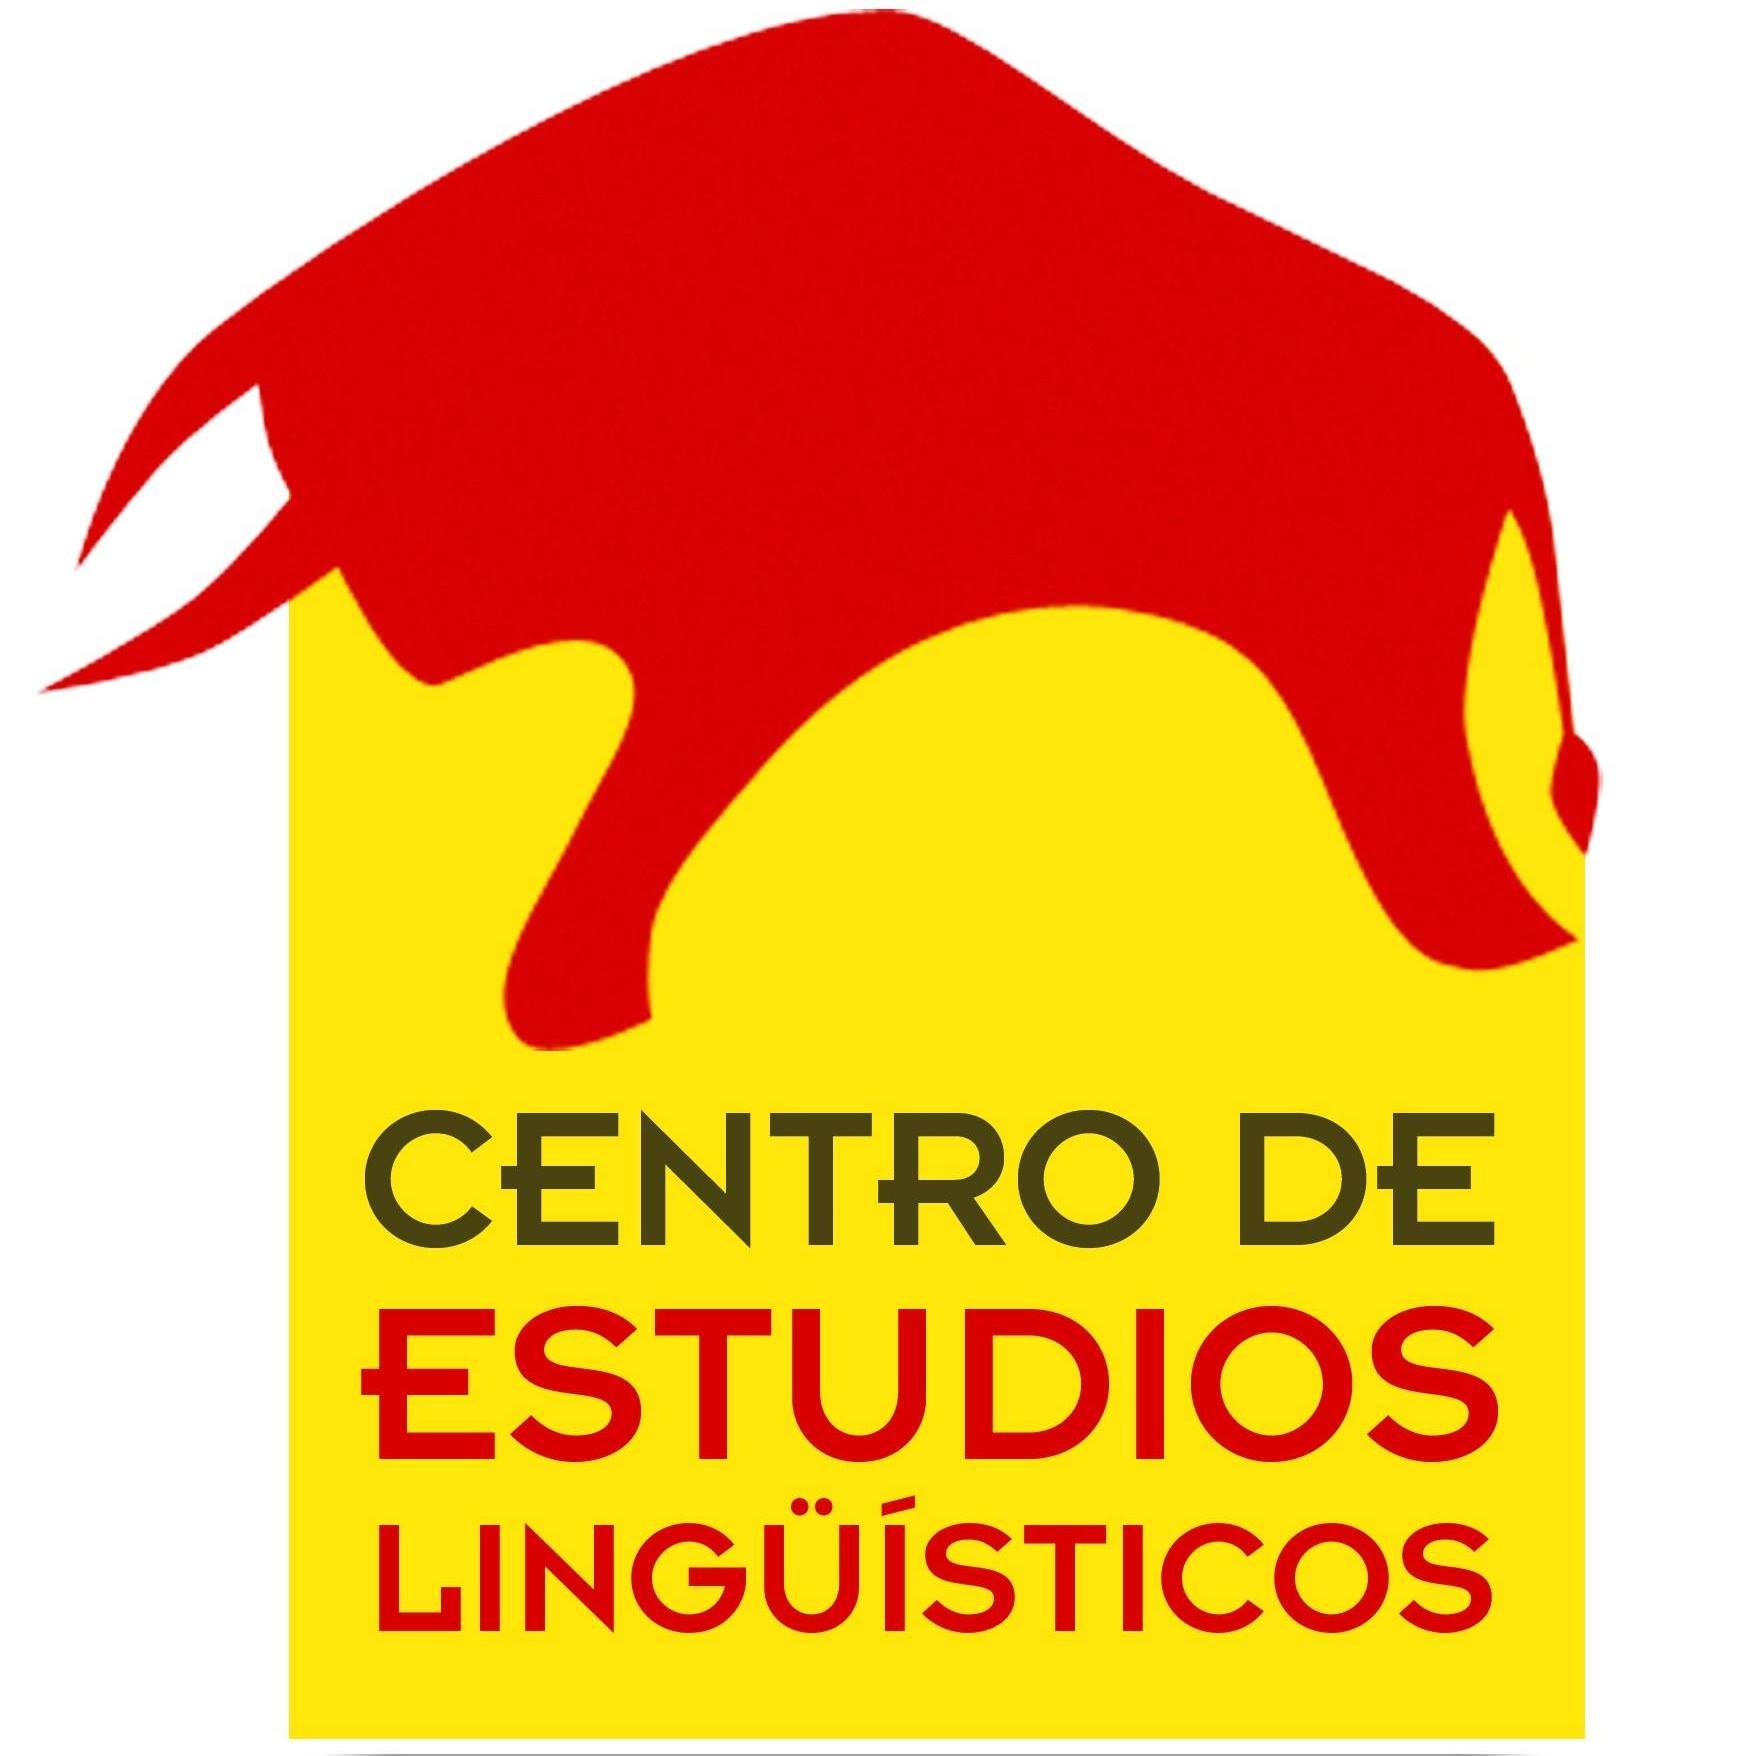 Centro de Estudios Linguisticos